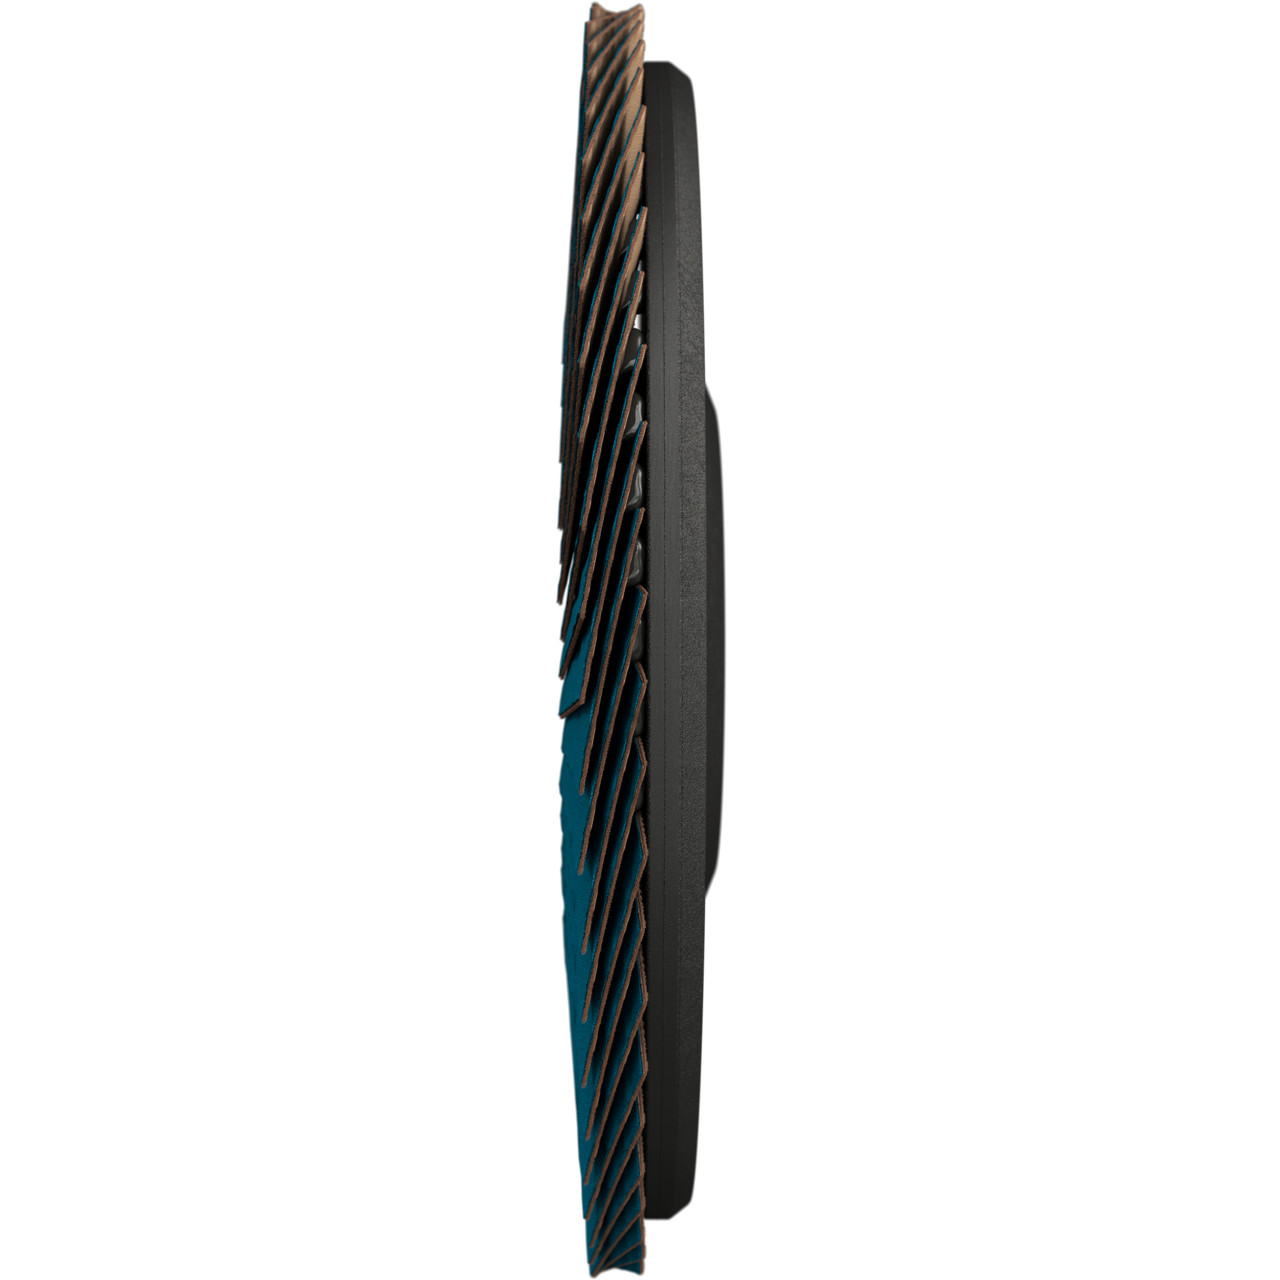 TYROLIT Fächerscheibe DxH 125x22,23 LONGLIFE für Stahl, P80, Form: 28N - gerade Ausführung (Kunststoffträgerkörper), Art. 34063390